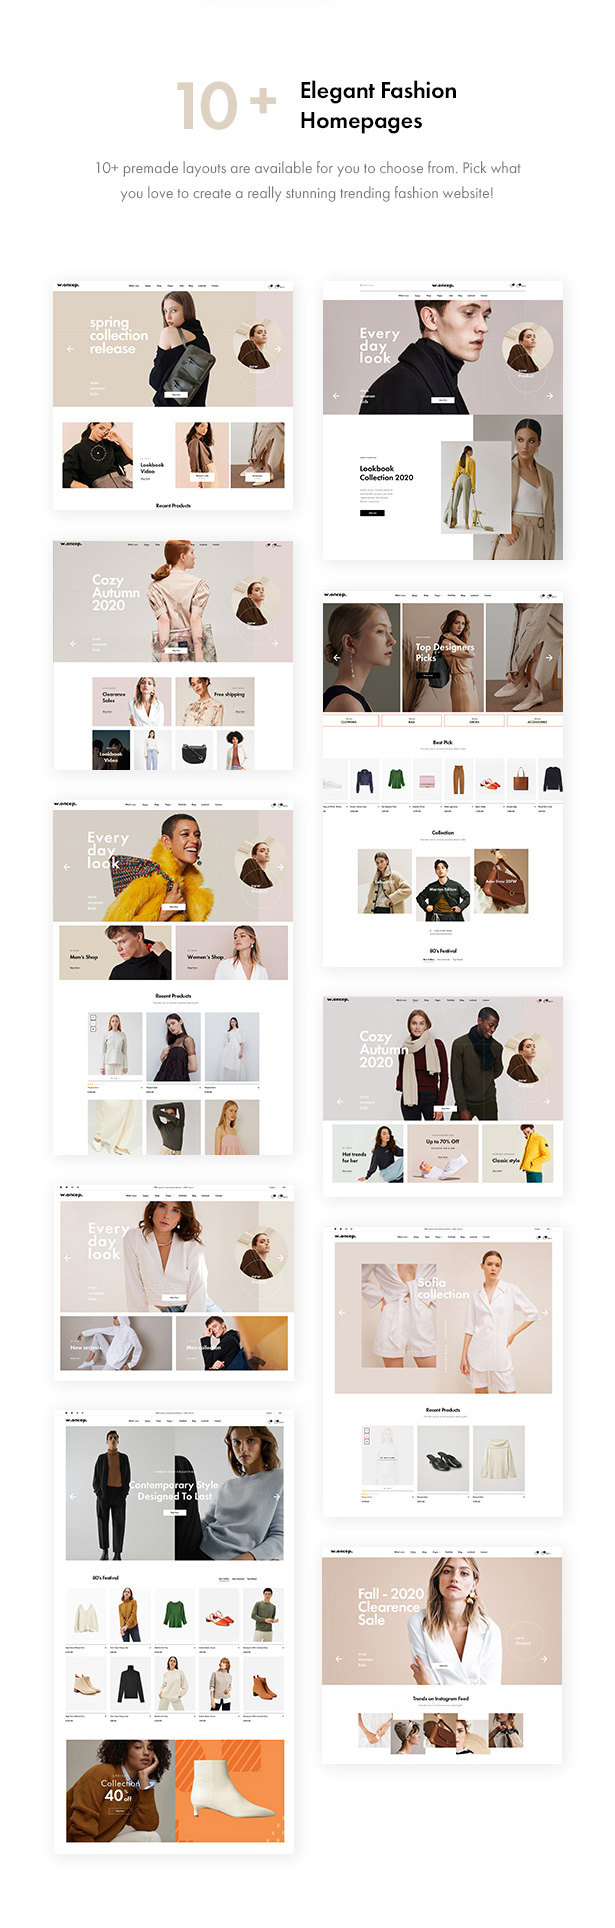 Woncep - Fashion WooCommerce WordPress Theme